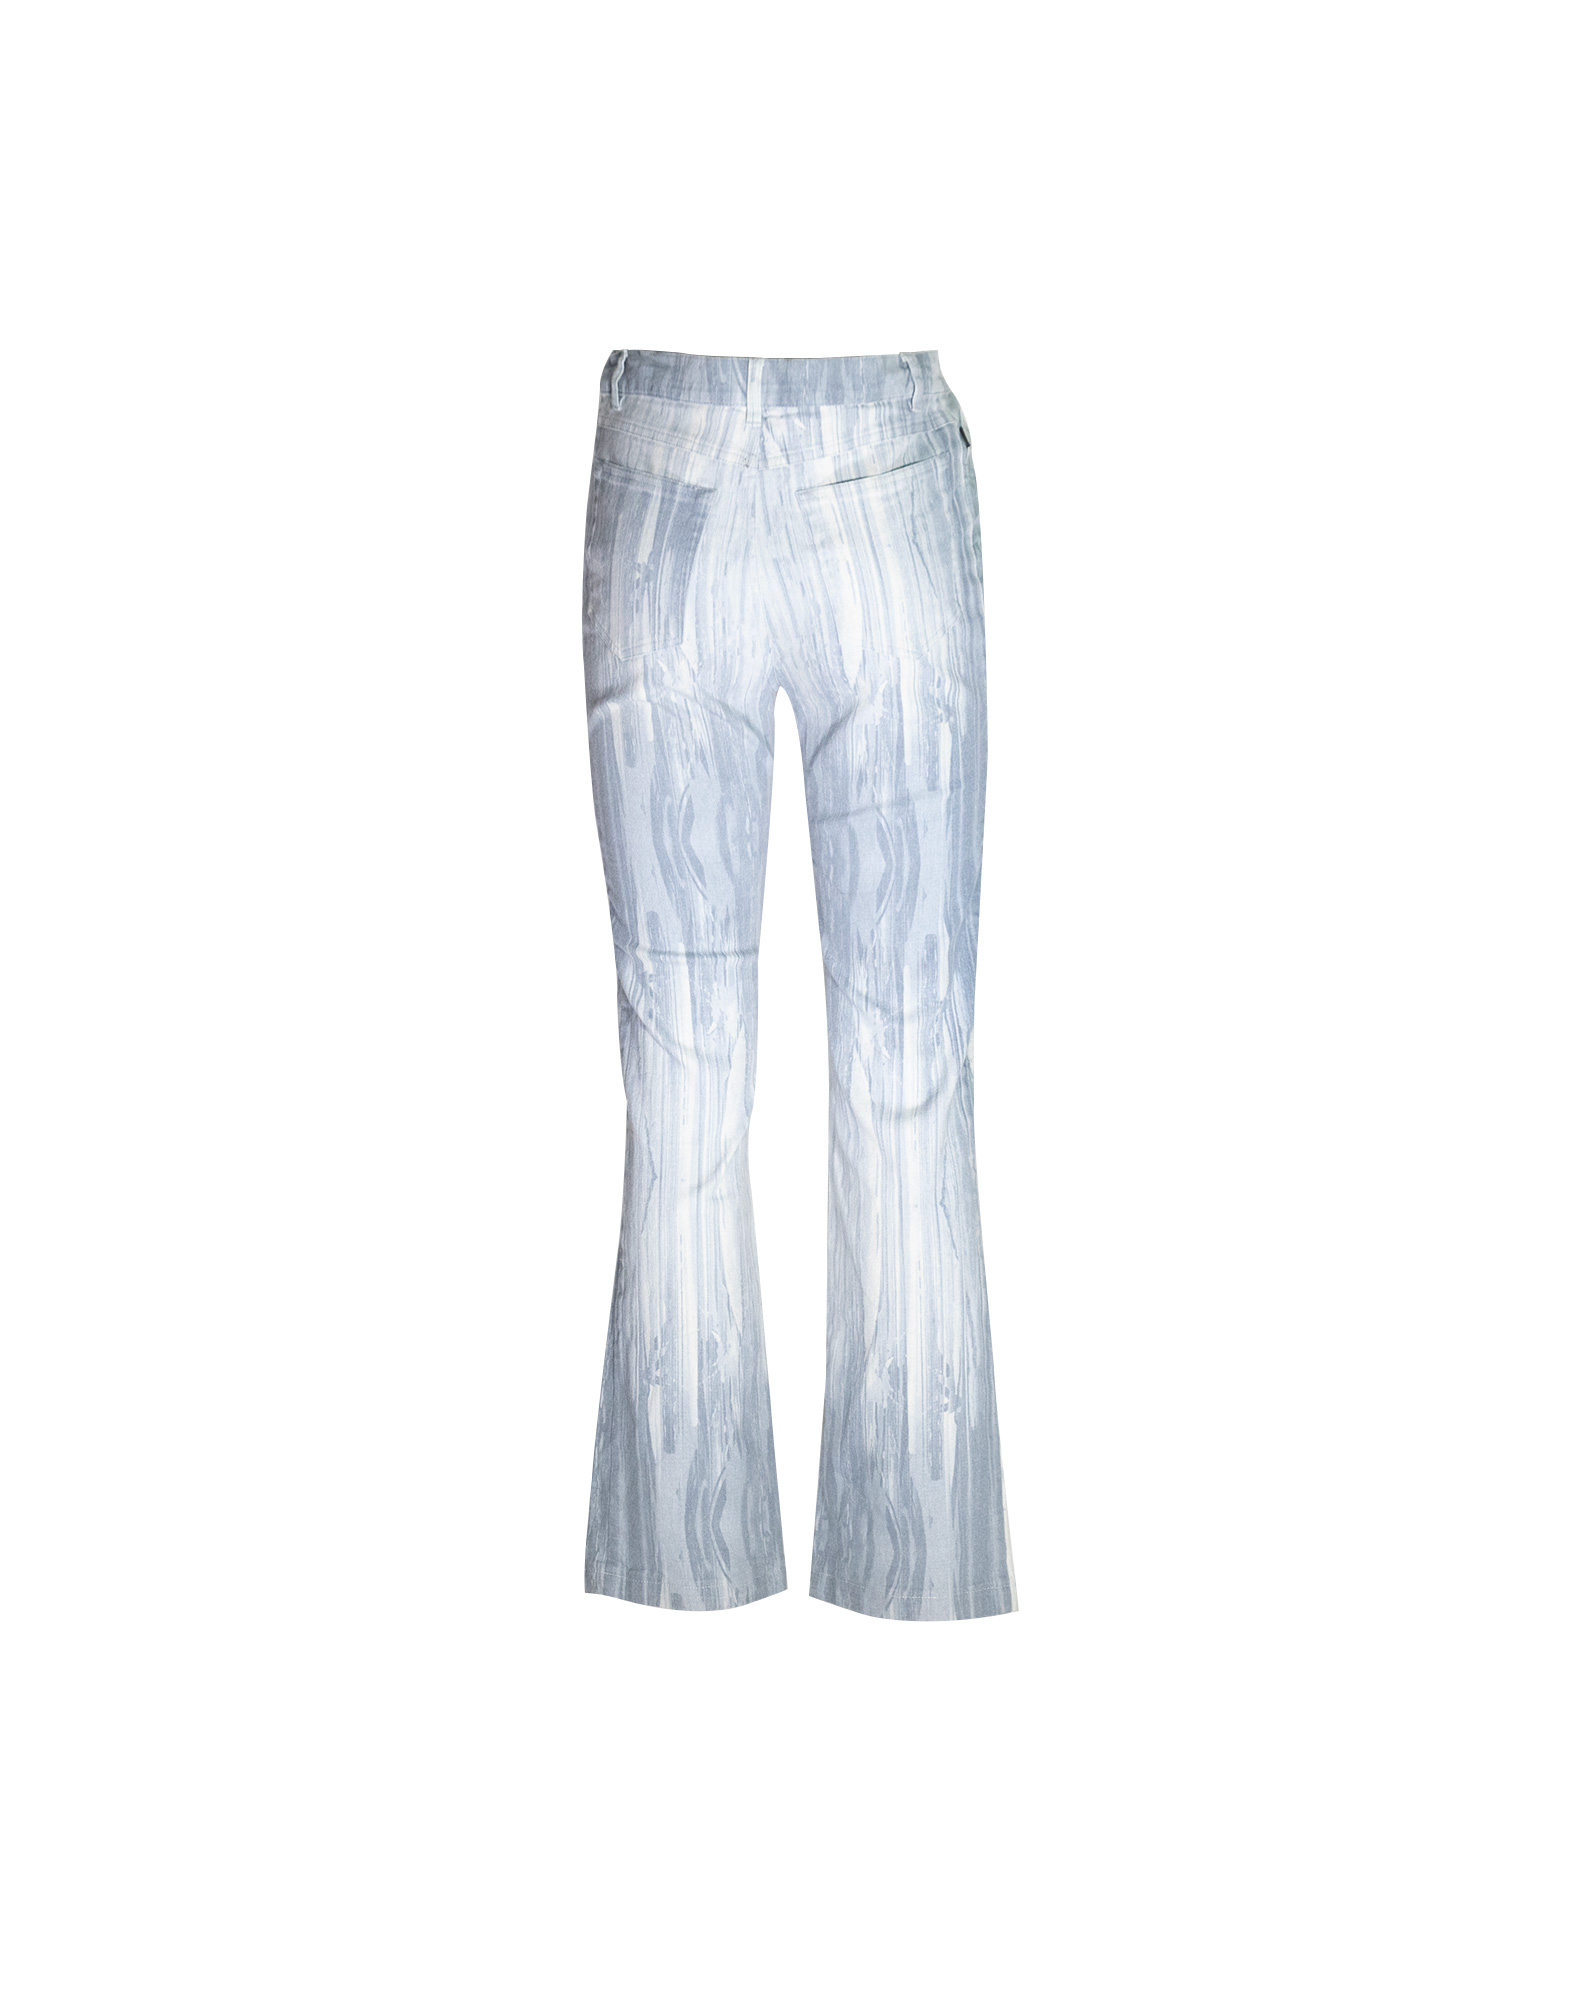 JustCavalli - Vintage patterned trousers